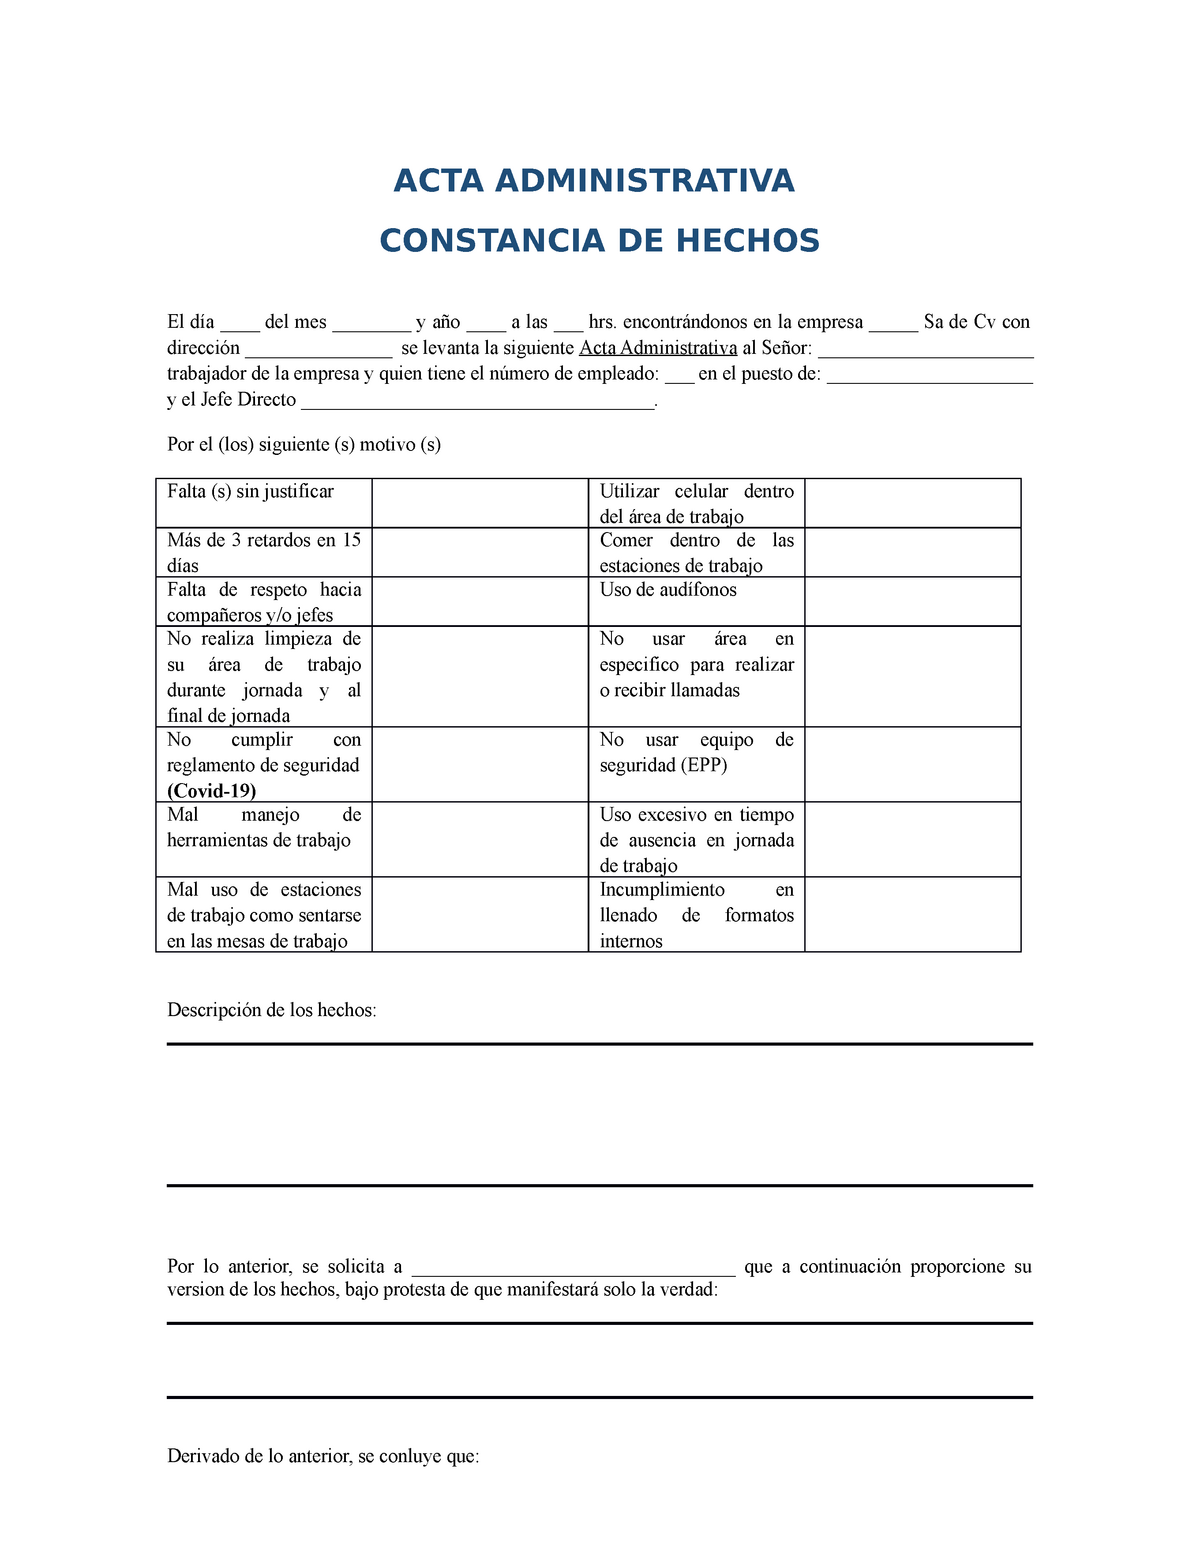 Formato Acta Administrativa Constancia de Hechos - ACTA ADMINISTRATIVA  CONSTANCIA DE HECHOS El día - Studocu